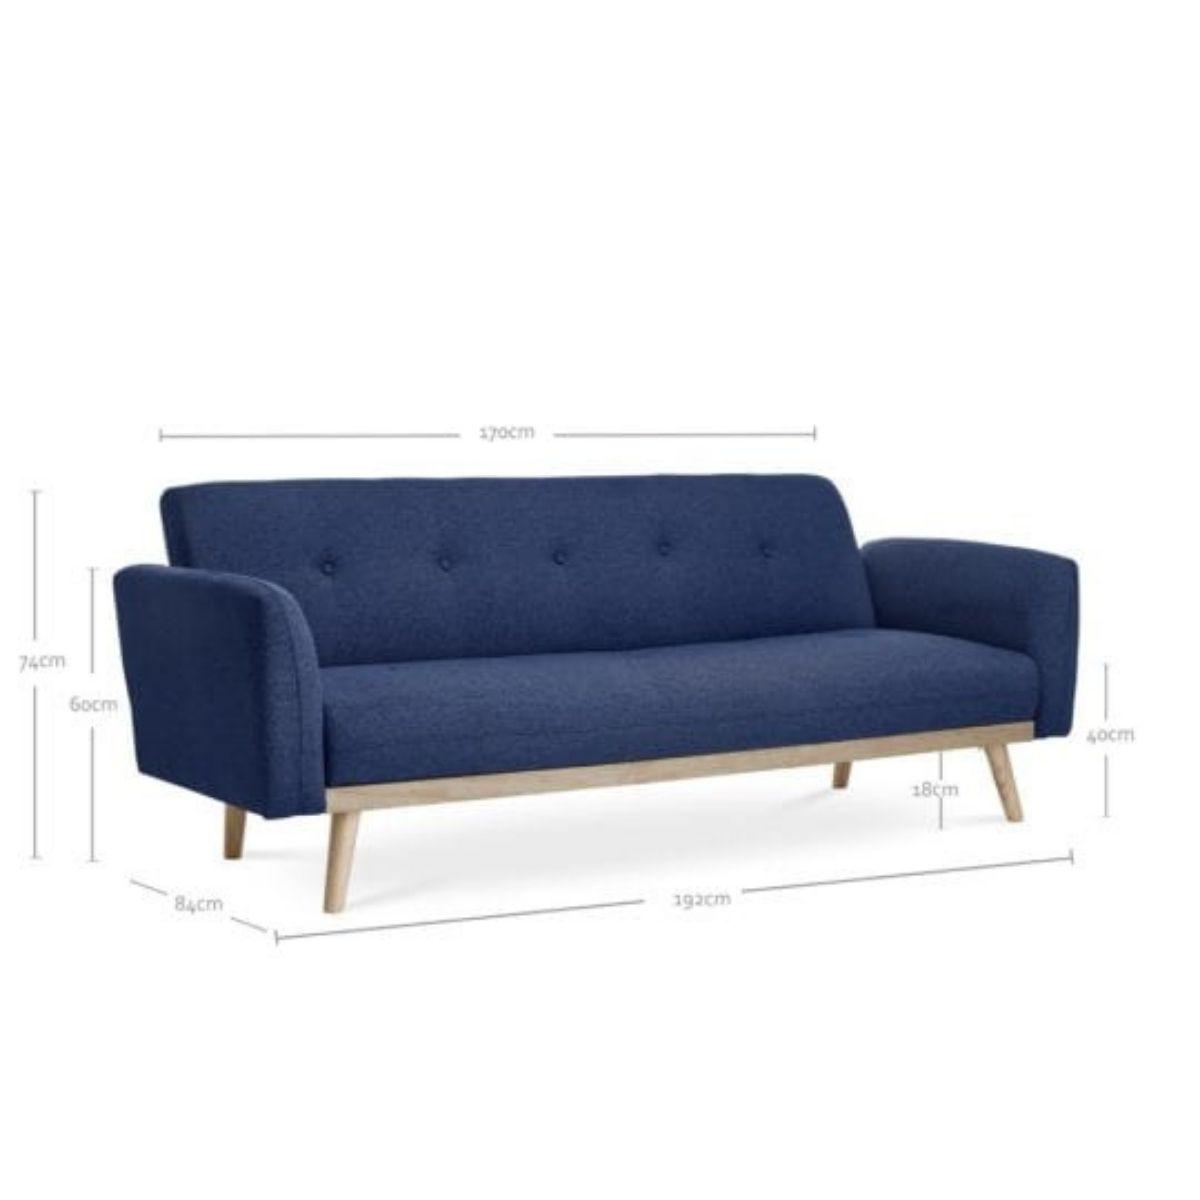 Nicholas 3-Seater Blue Foldable Sofa Bed